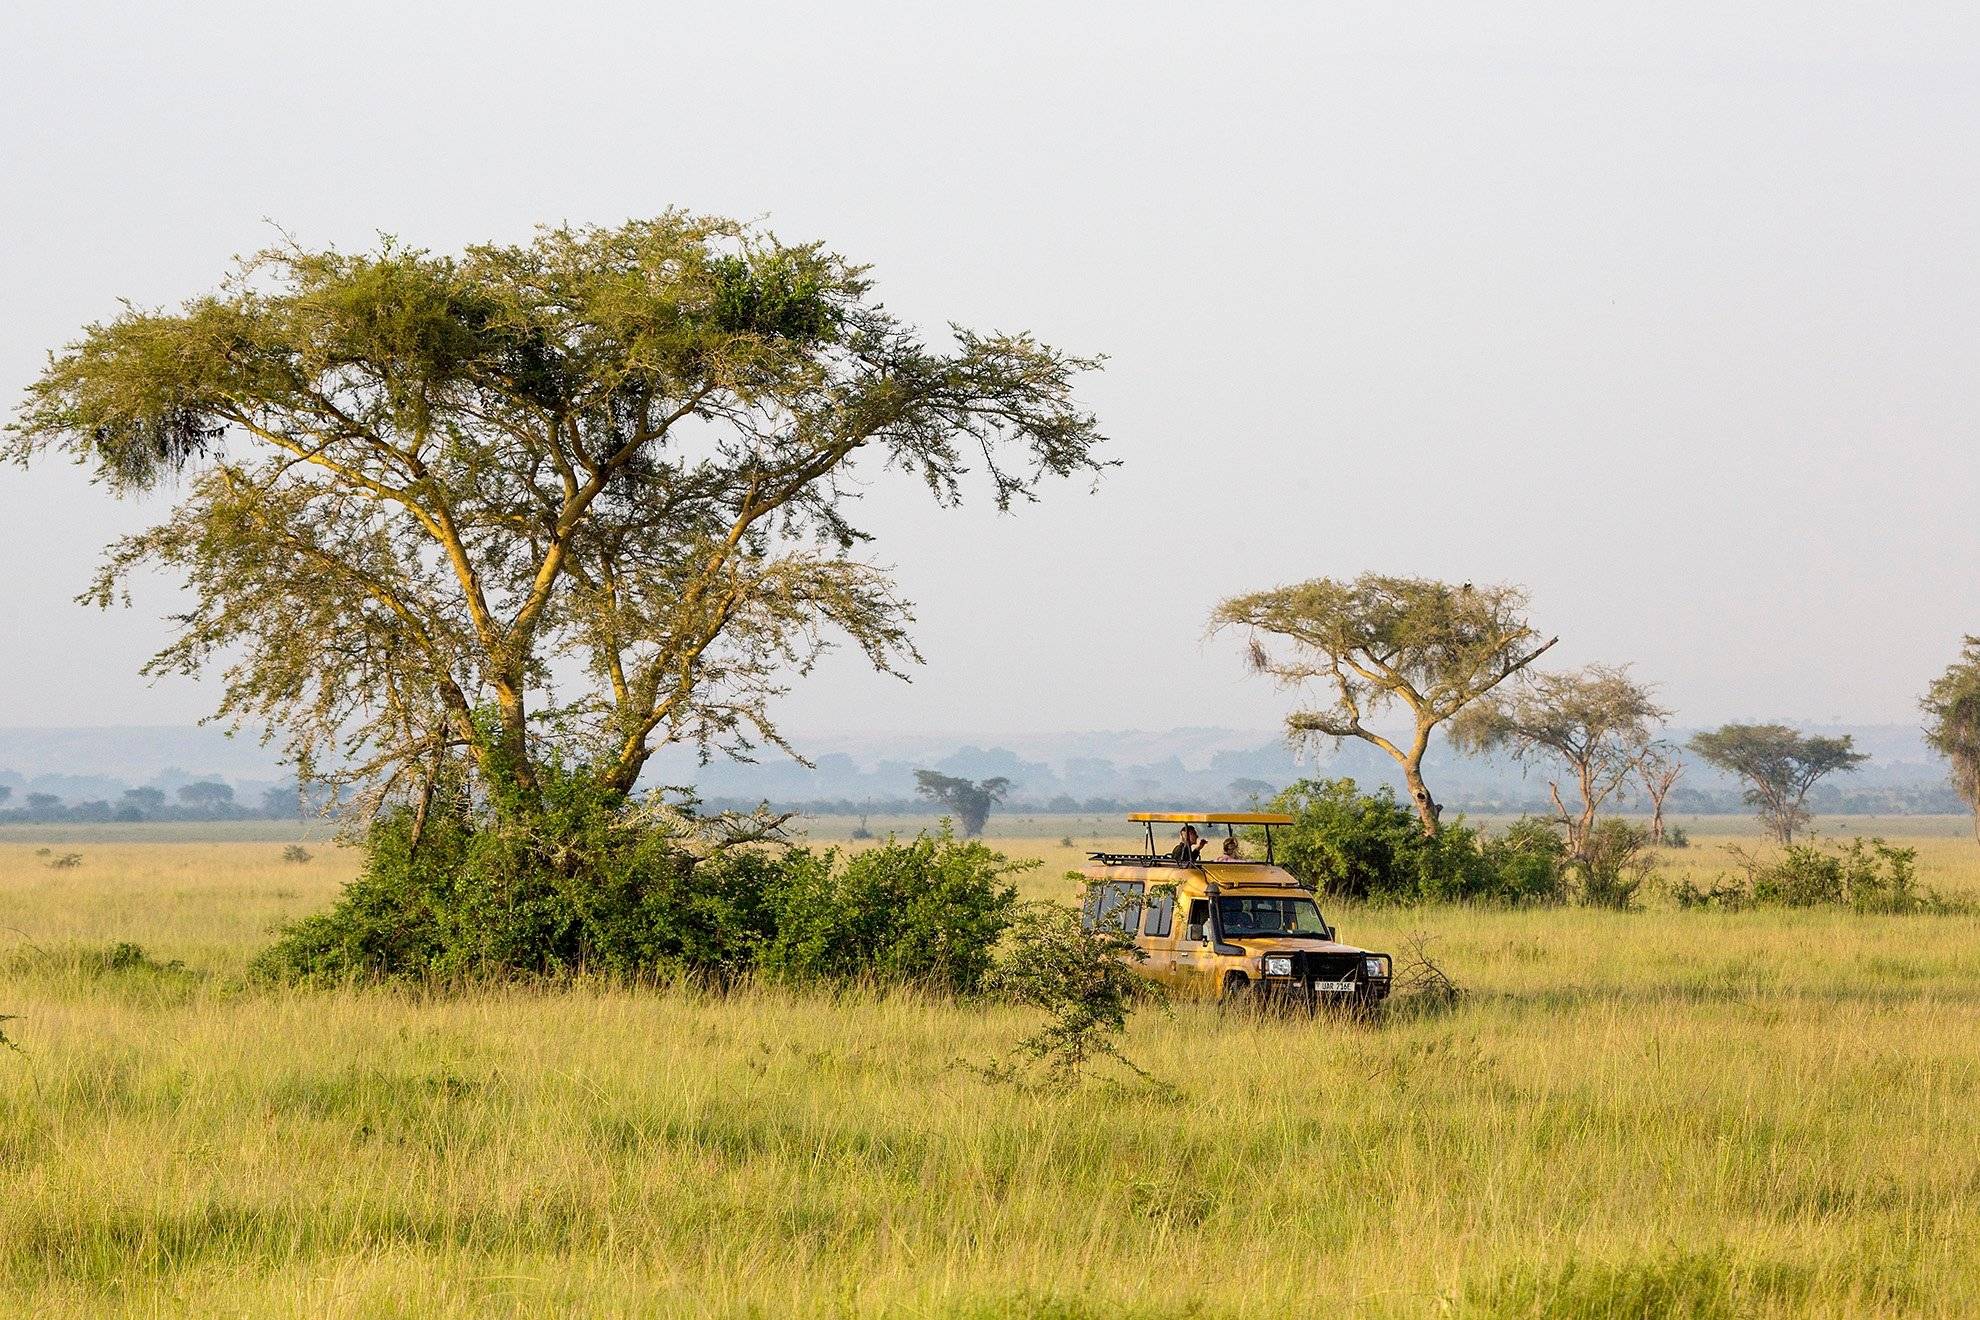 Safari Twiga para Grupos: Explora la Vida Salvaje Africana